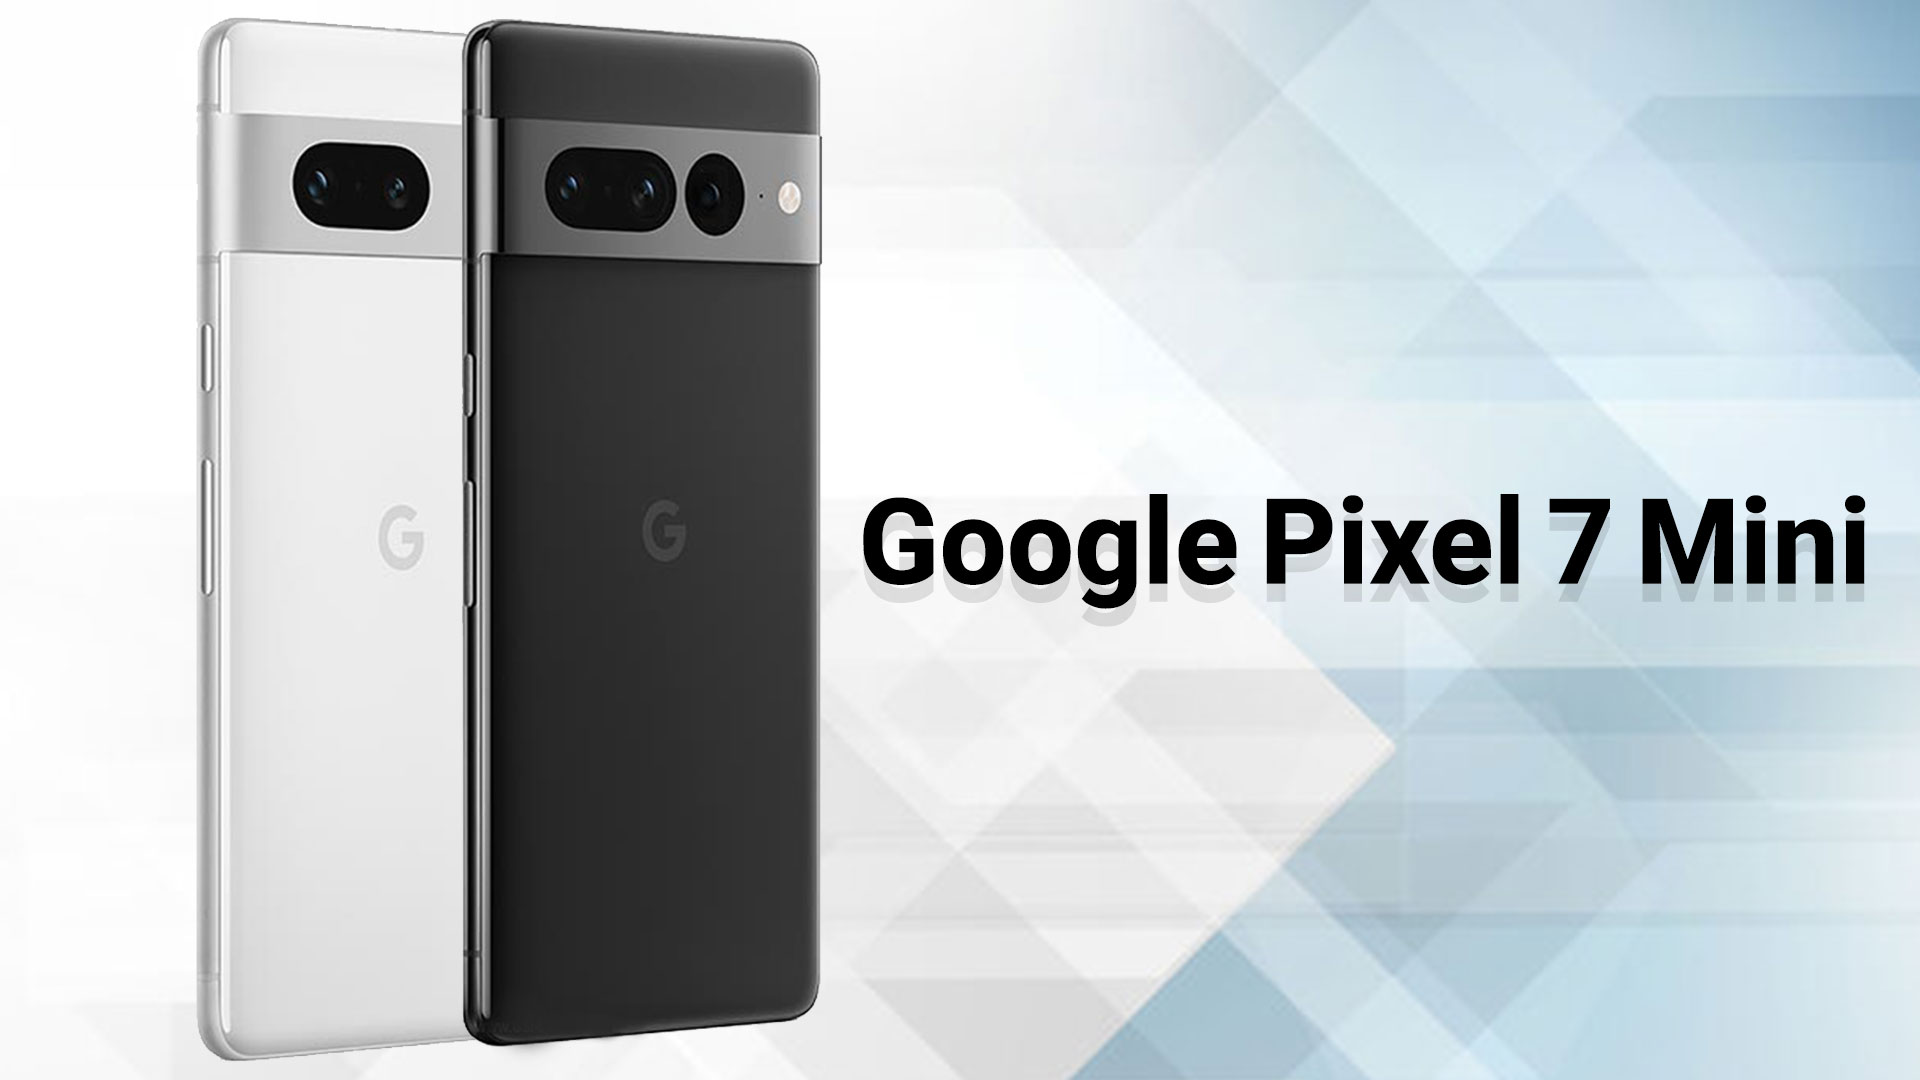 Alleged-Google-Pixel-7-Minis-key-details-emerge